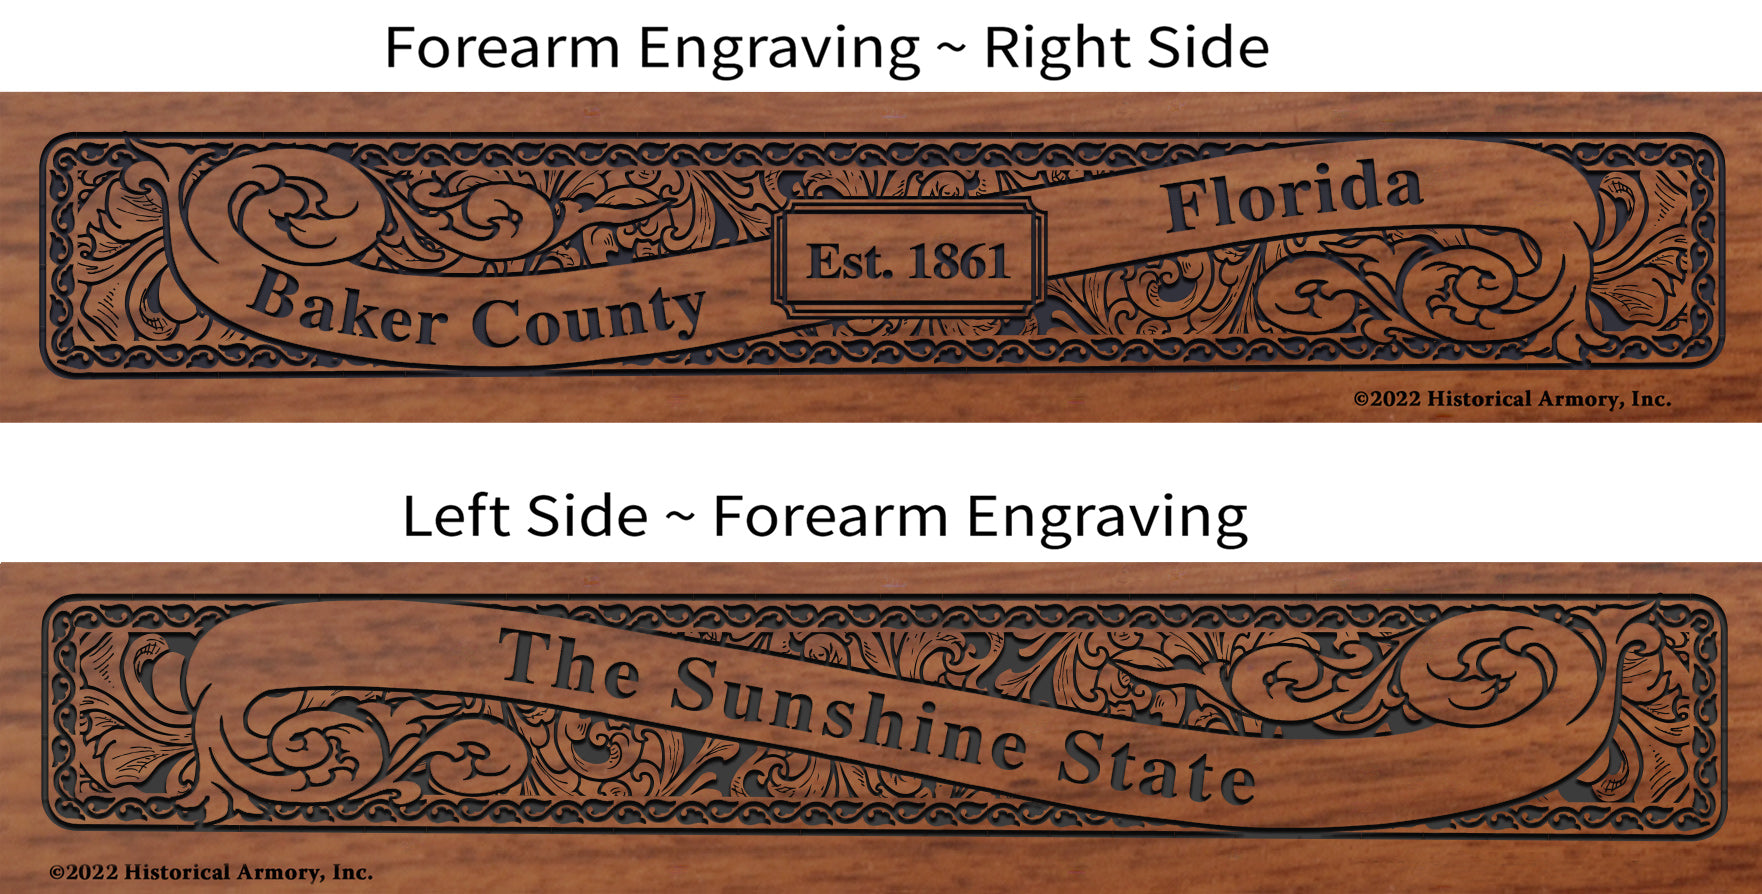 Baker County Florida Engraved Rifle Forearm